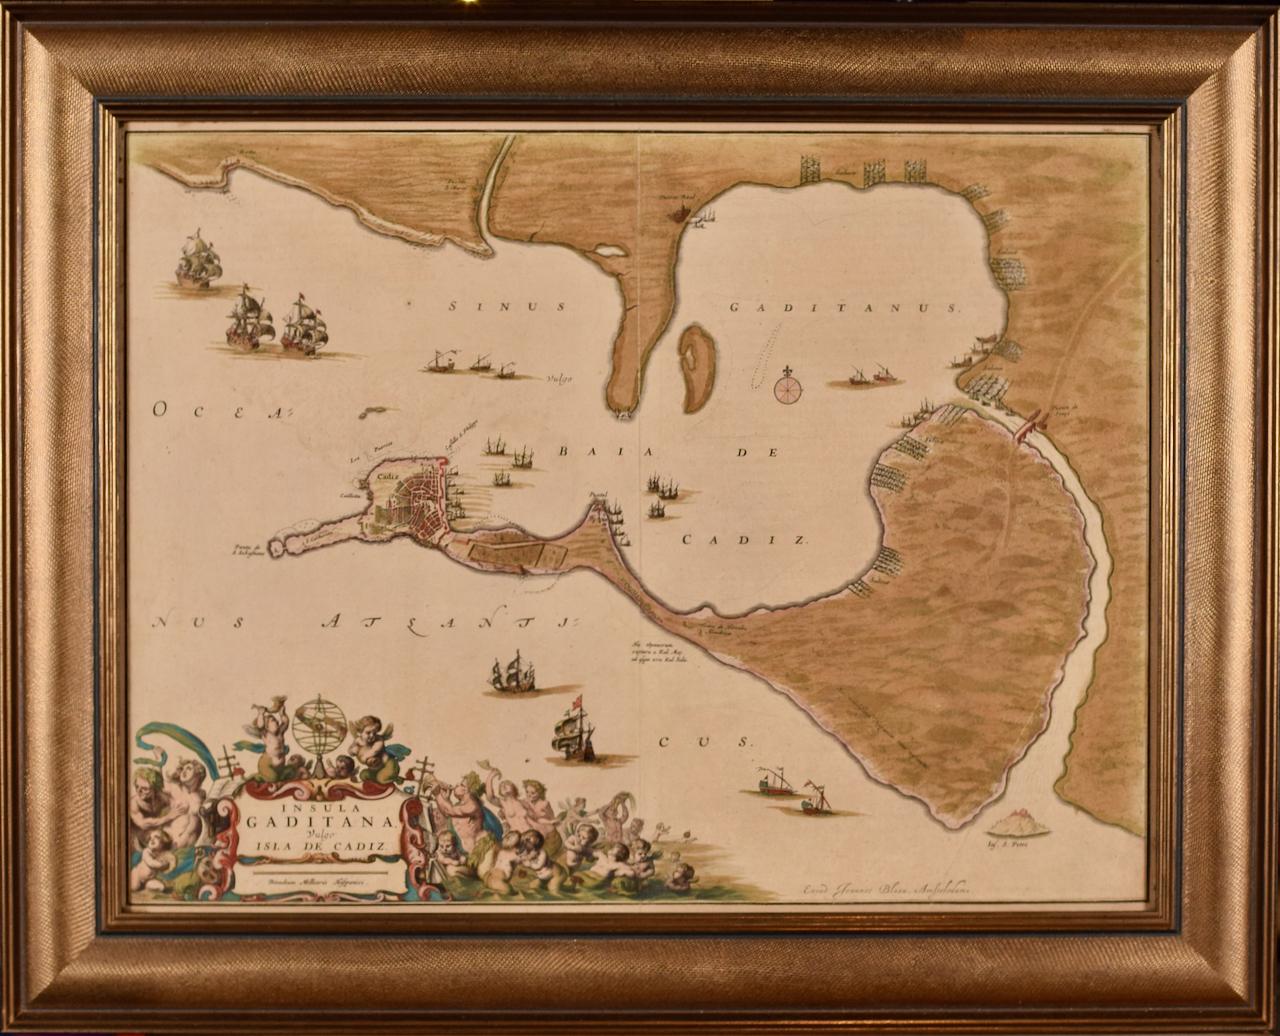 Joan (Johannes) Blaeu Print - Cadiz Island: A Framed 17th Century Hand-colored Map from Blaeu's Atlas Major